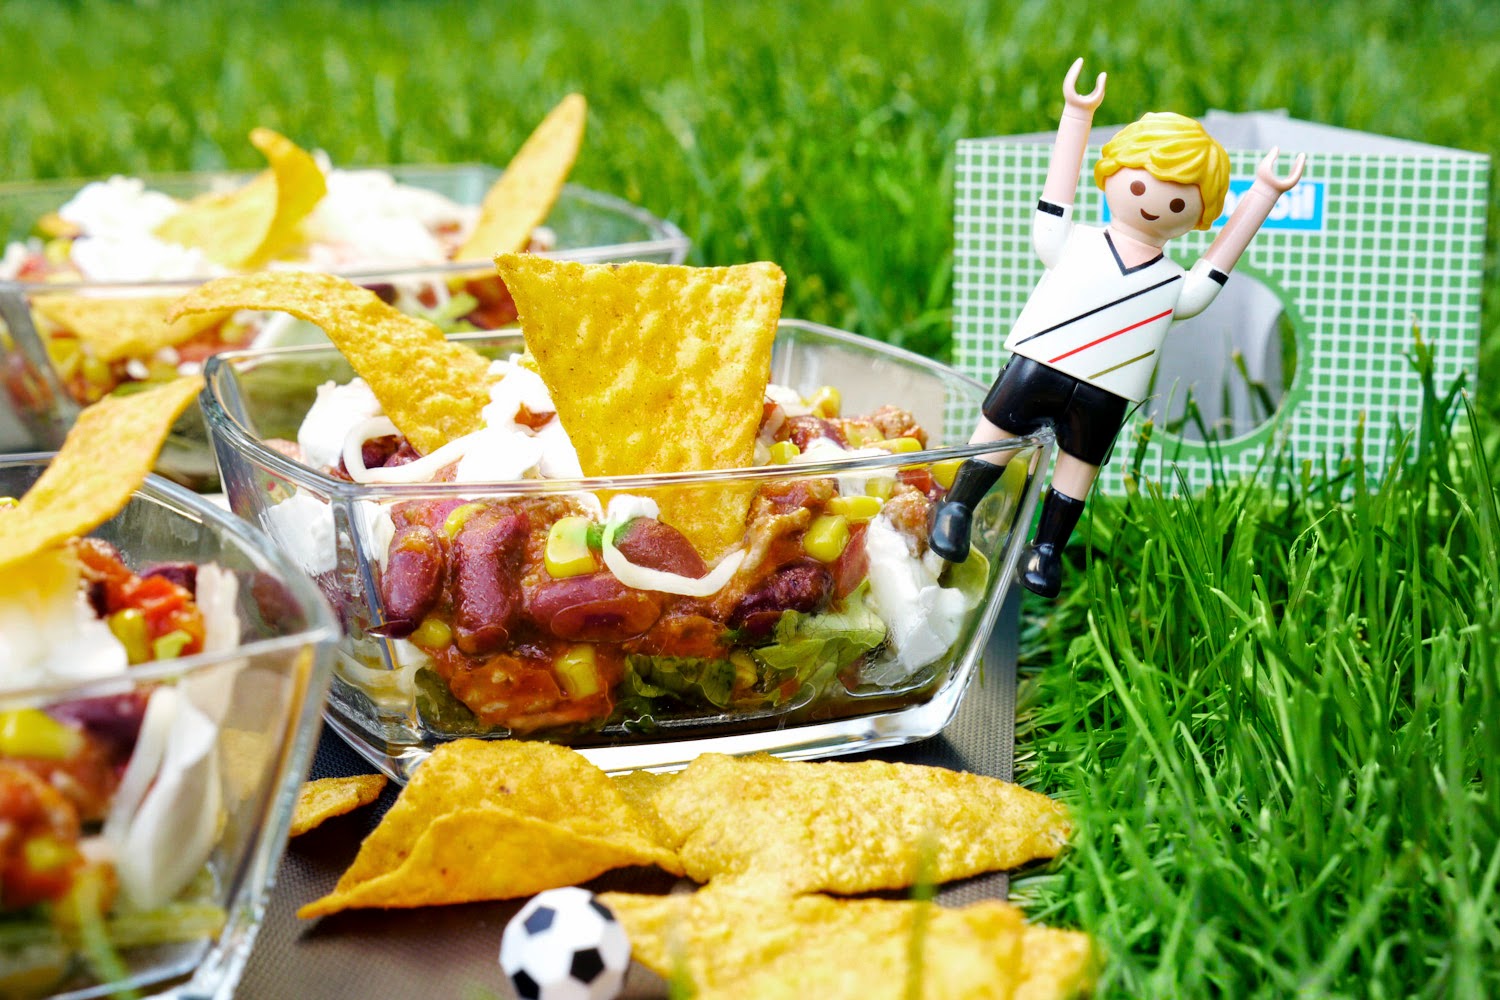 Fußball-WM: Würziger Tex Mex Tacosalat mit selbstgemachter, scharfer Salsa